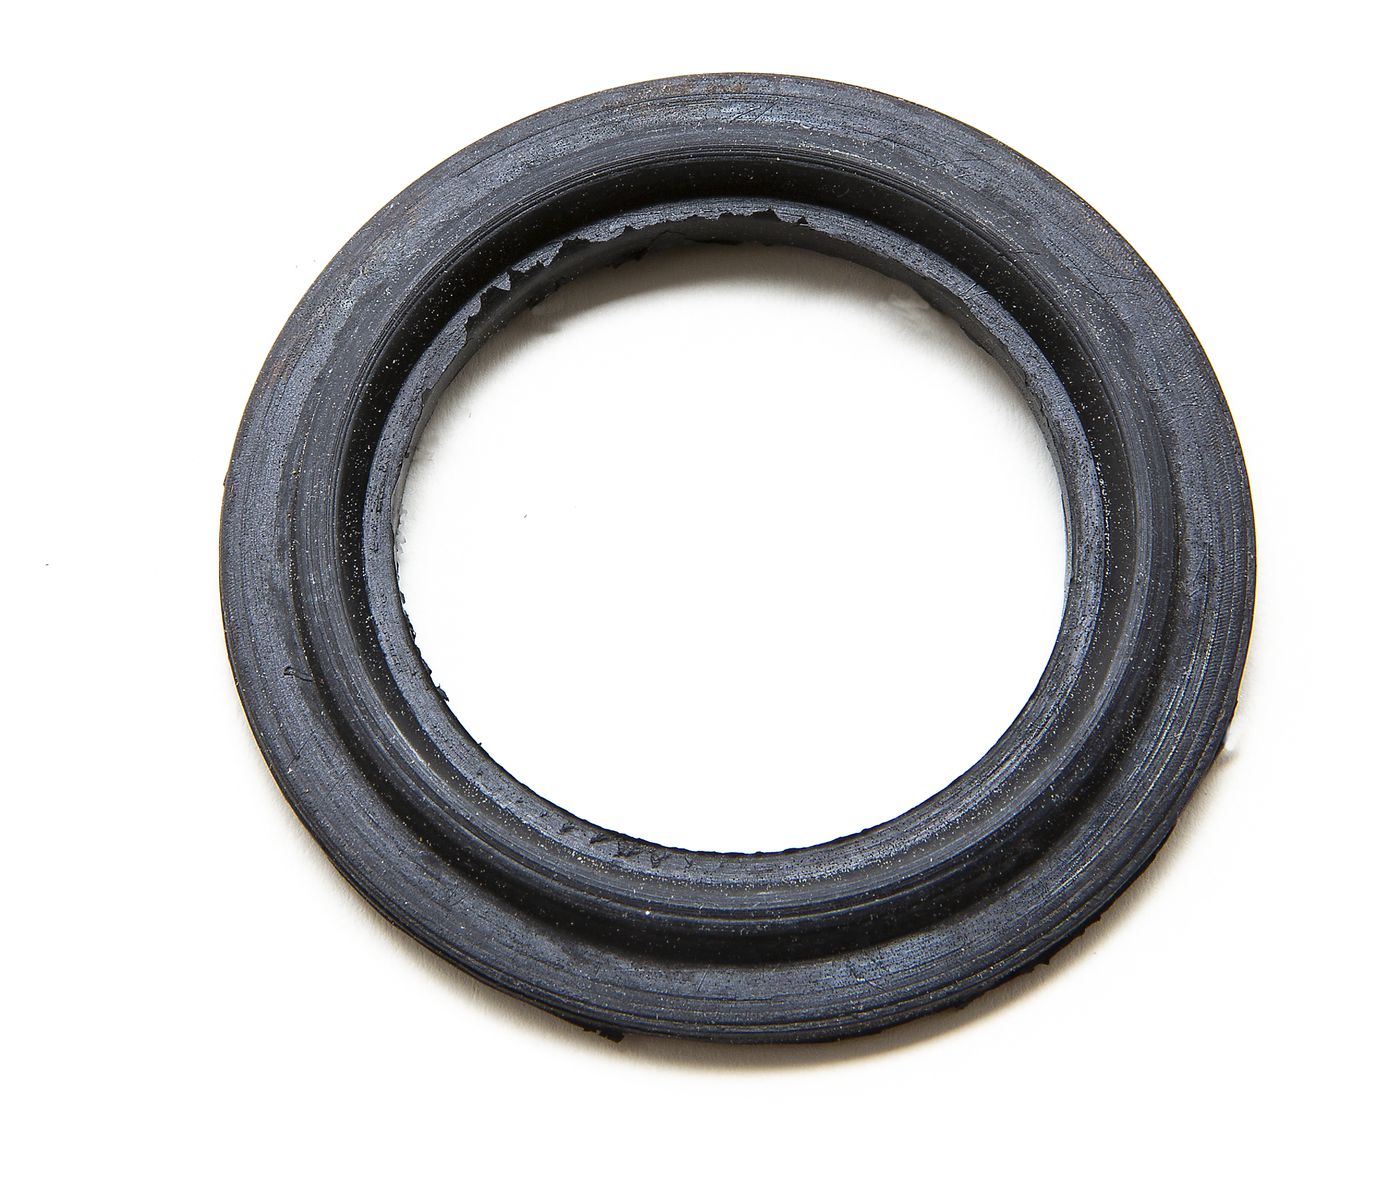 Gummidichtring
Rubber sealing ring
Joint en caoutchouc
Junta de 